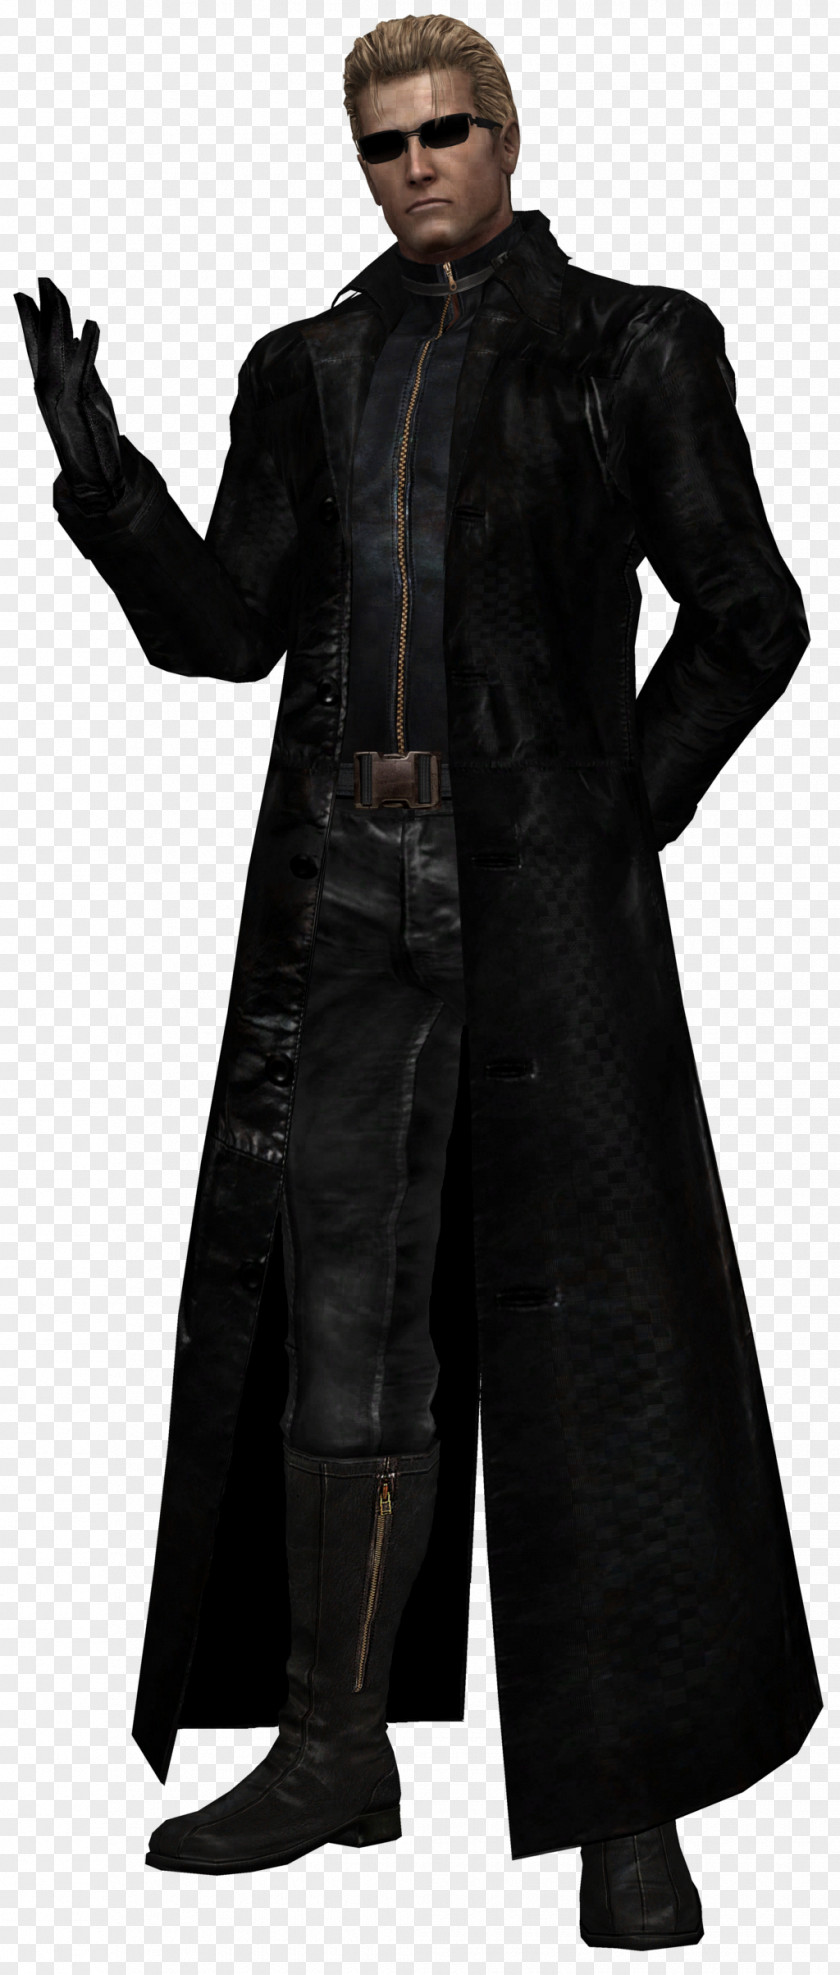 Albert Wesker Resident Evil 5 Jake Muller Video Game PNG